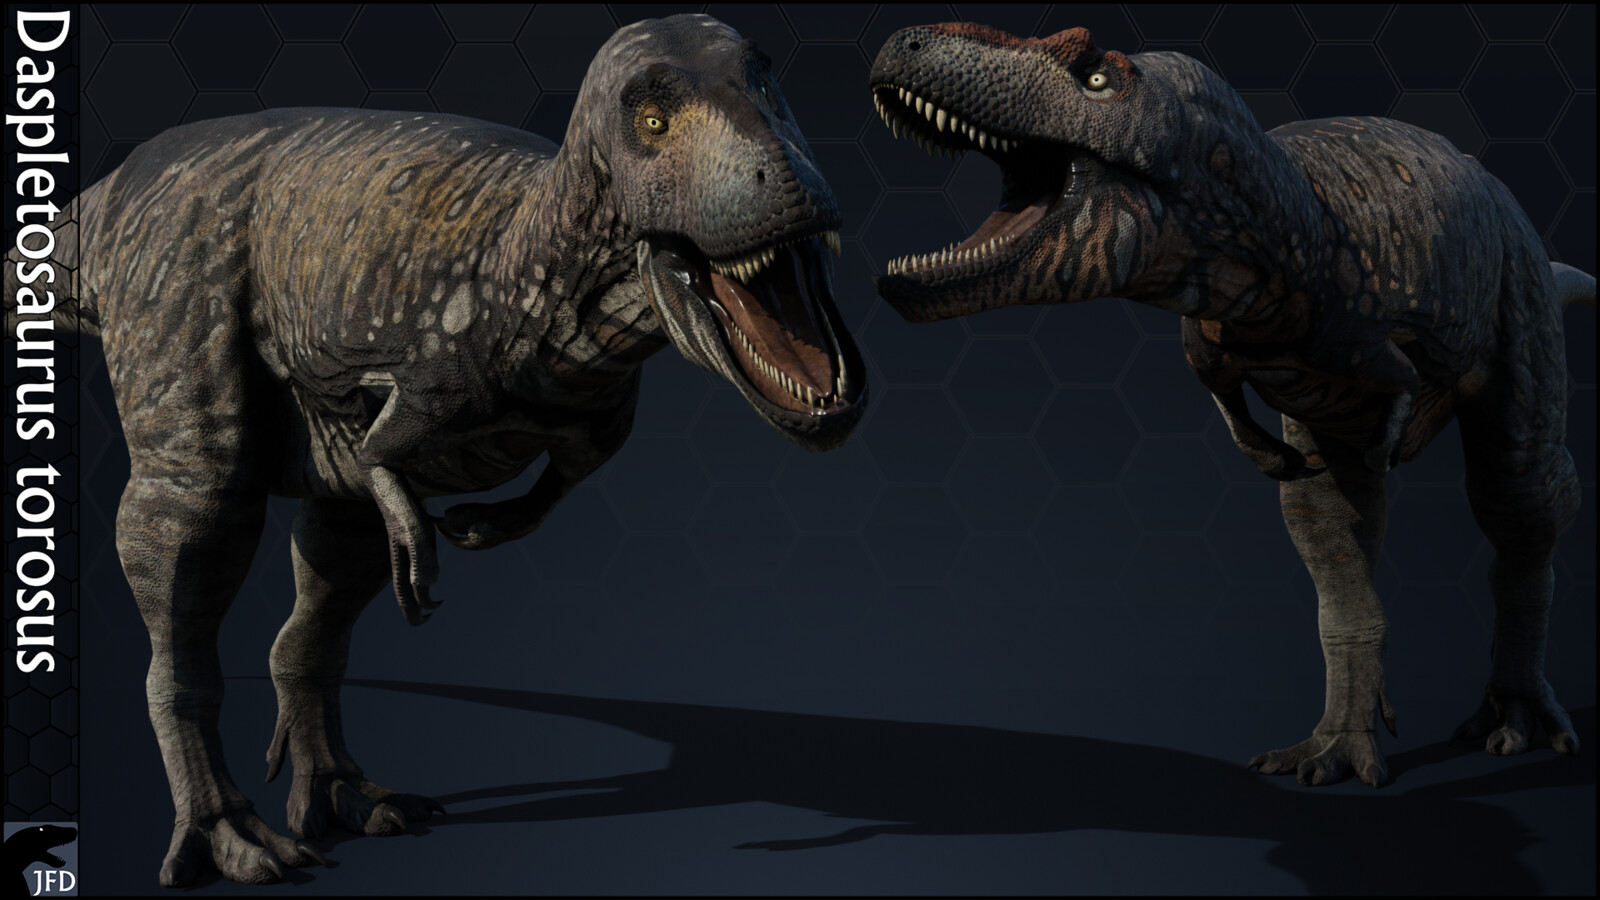 Daspletosaurus torosus female (left) and male (right) render.